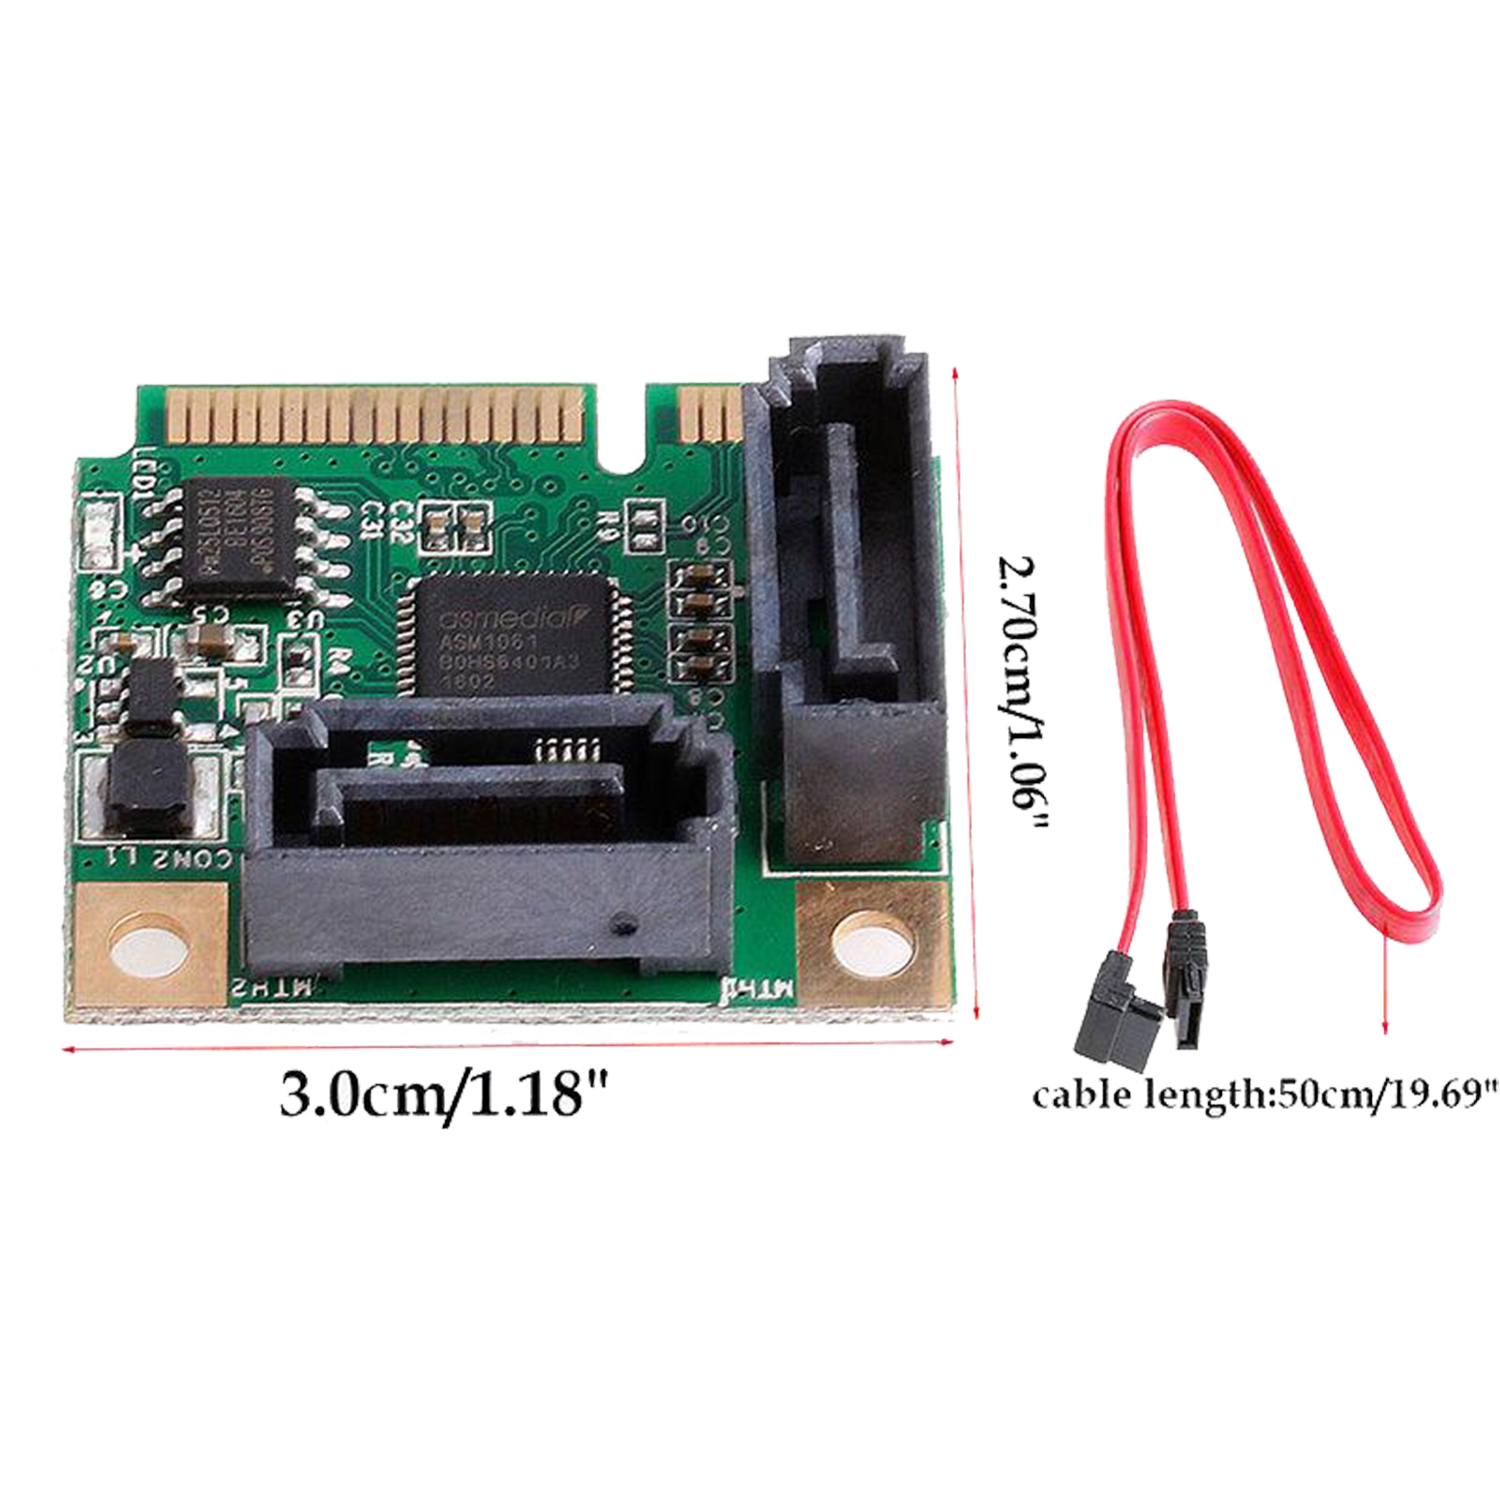 pad Pretentieloos garen Mini PCI- Express 2 Port Sata III Controller Card